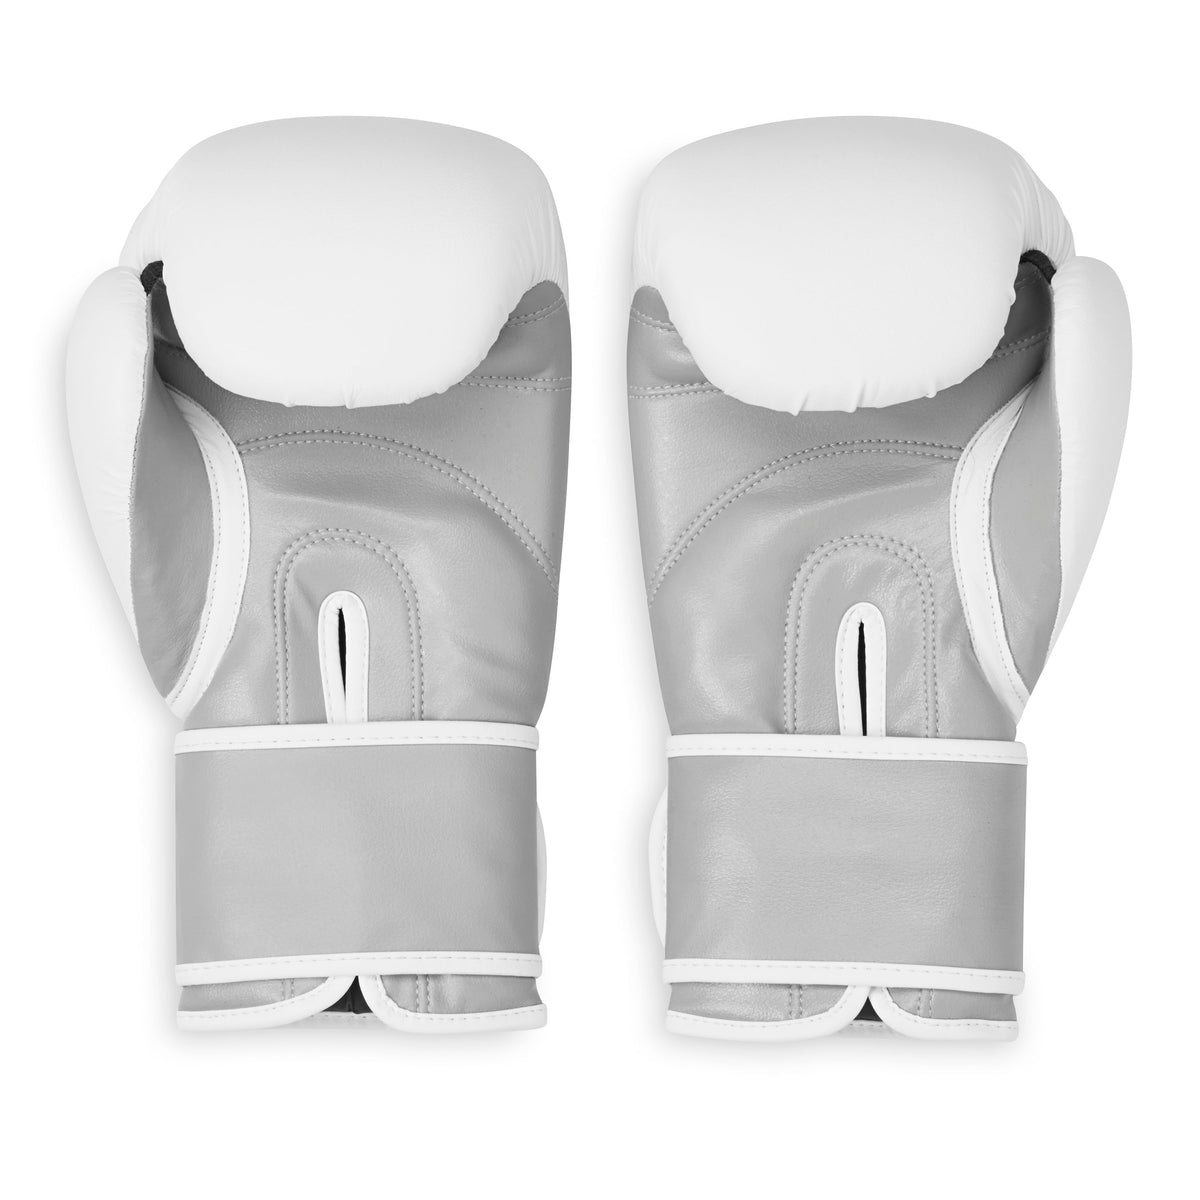 FILA Boxing Gloves (8oz) White/Grey both gloves interior